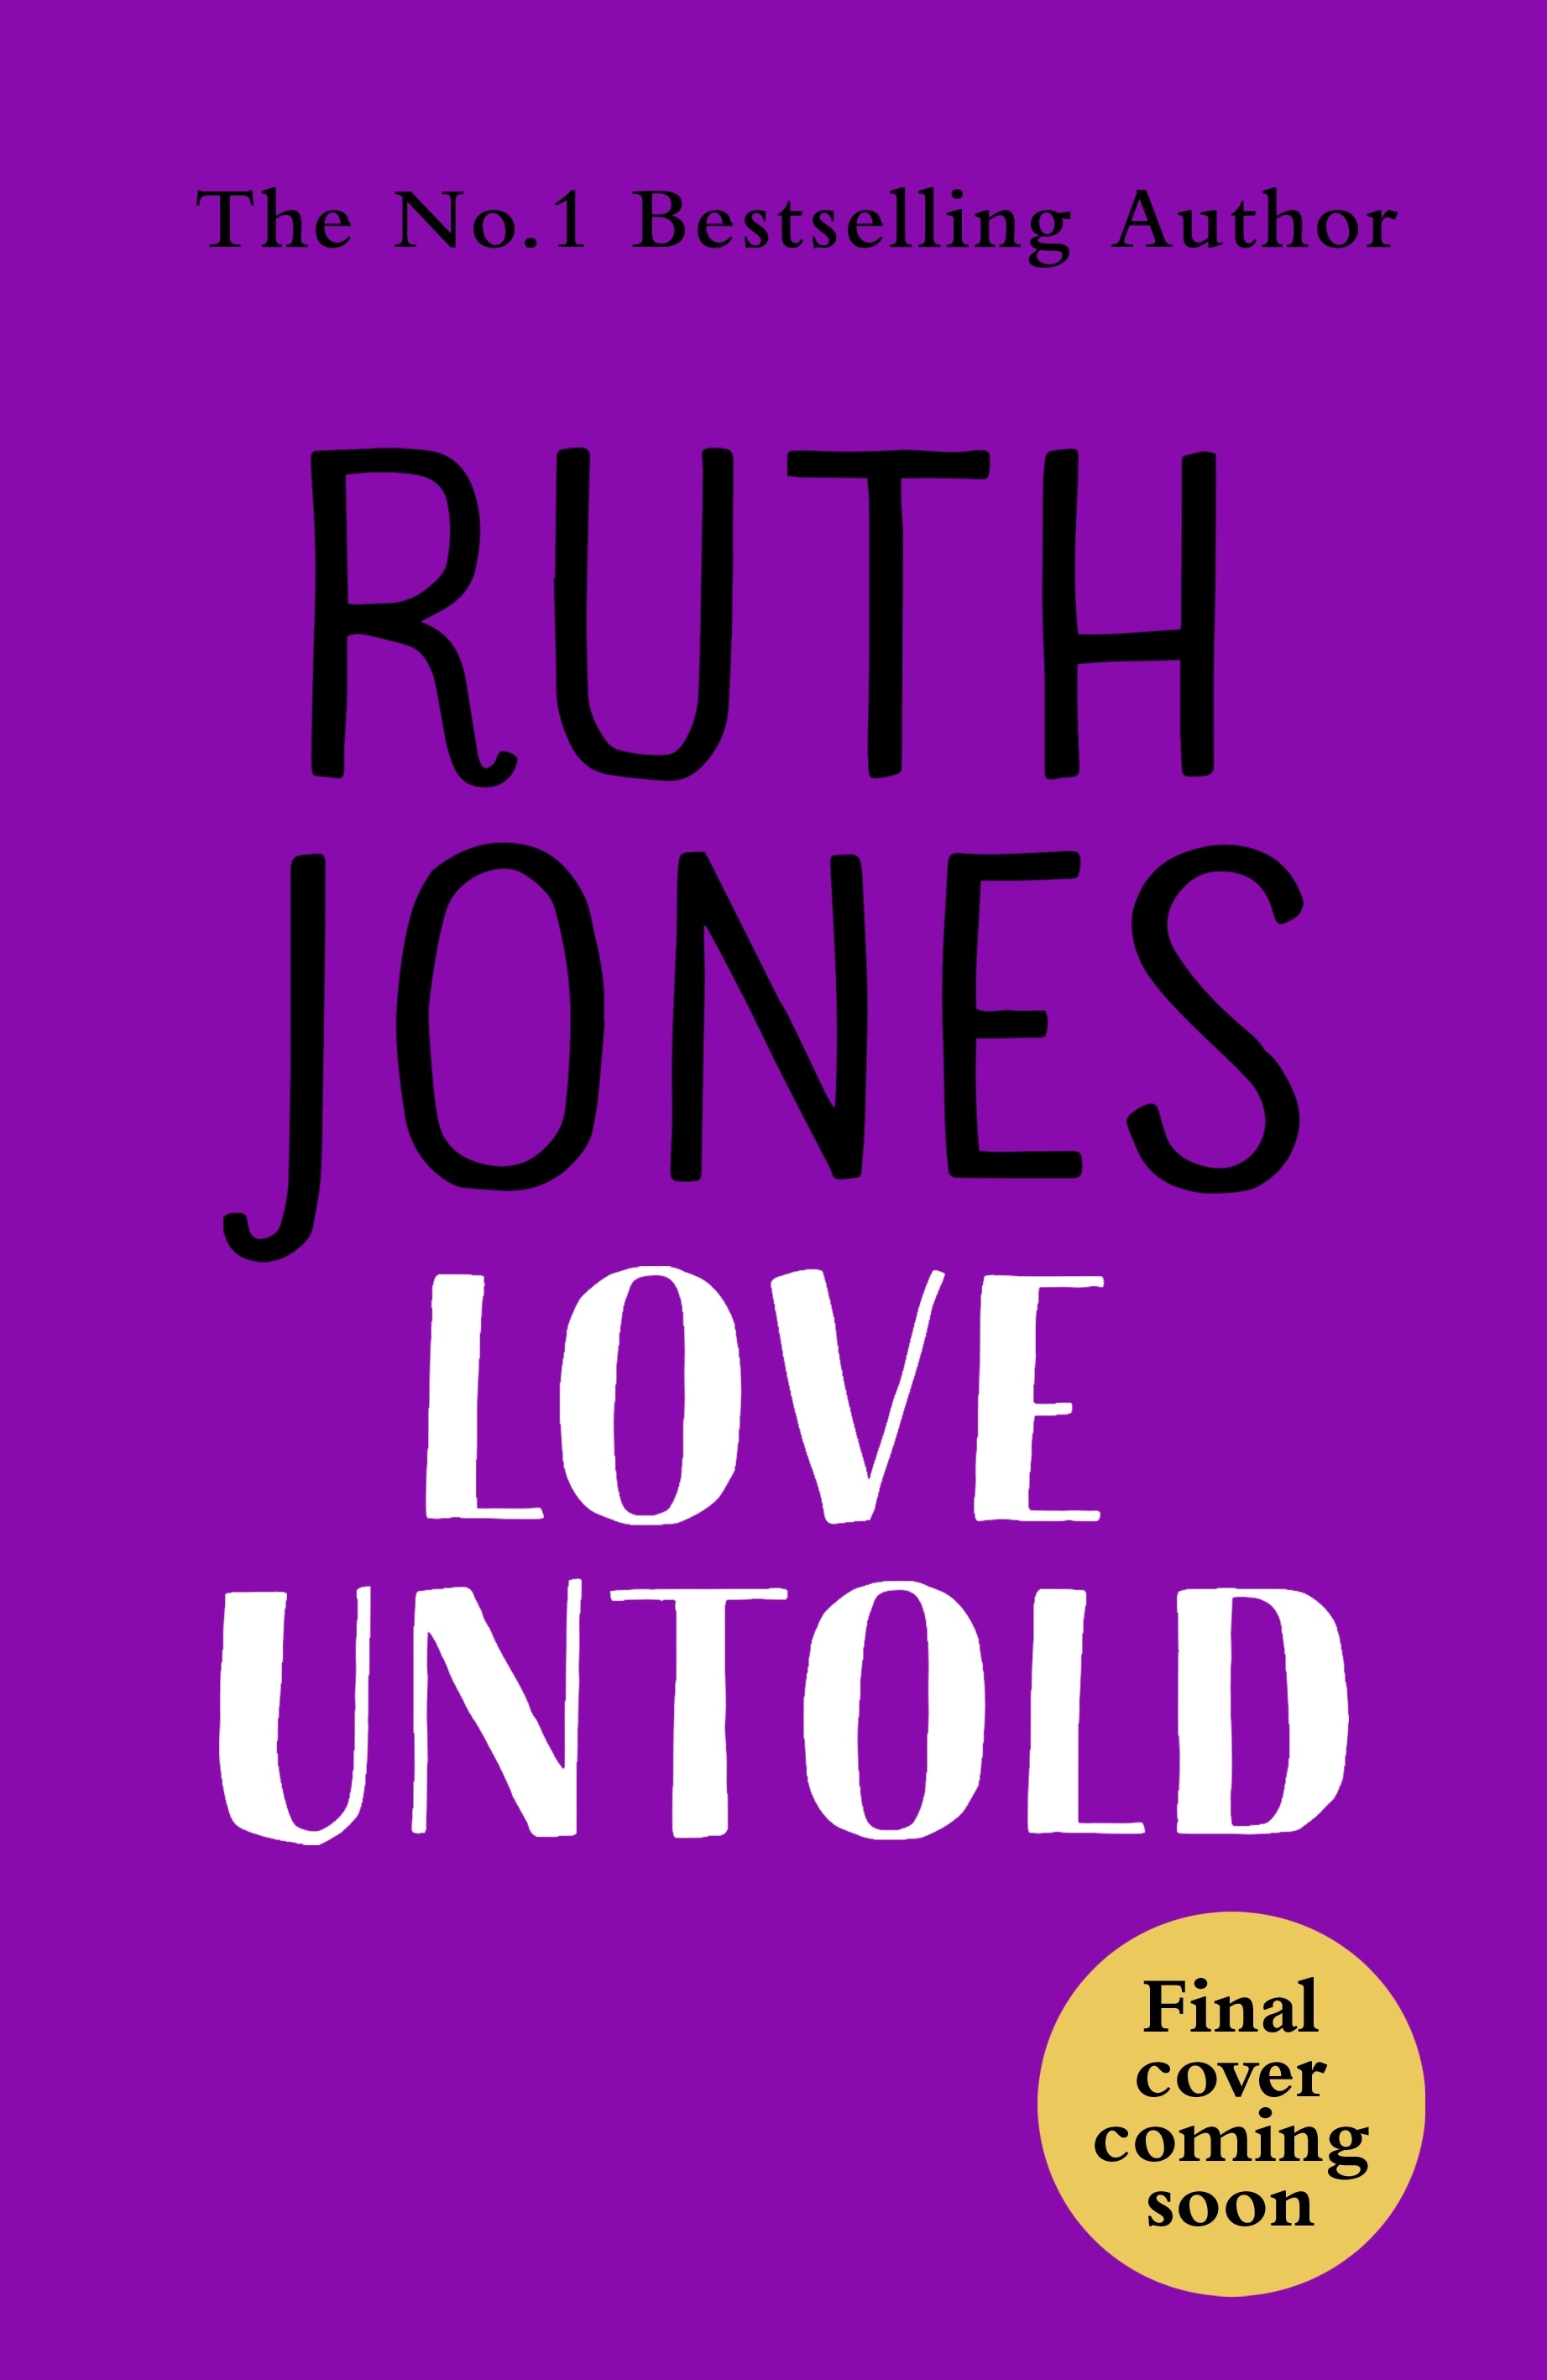 Book “Love Untold” by Ruth Jones — September 1, 2022